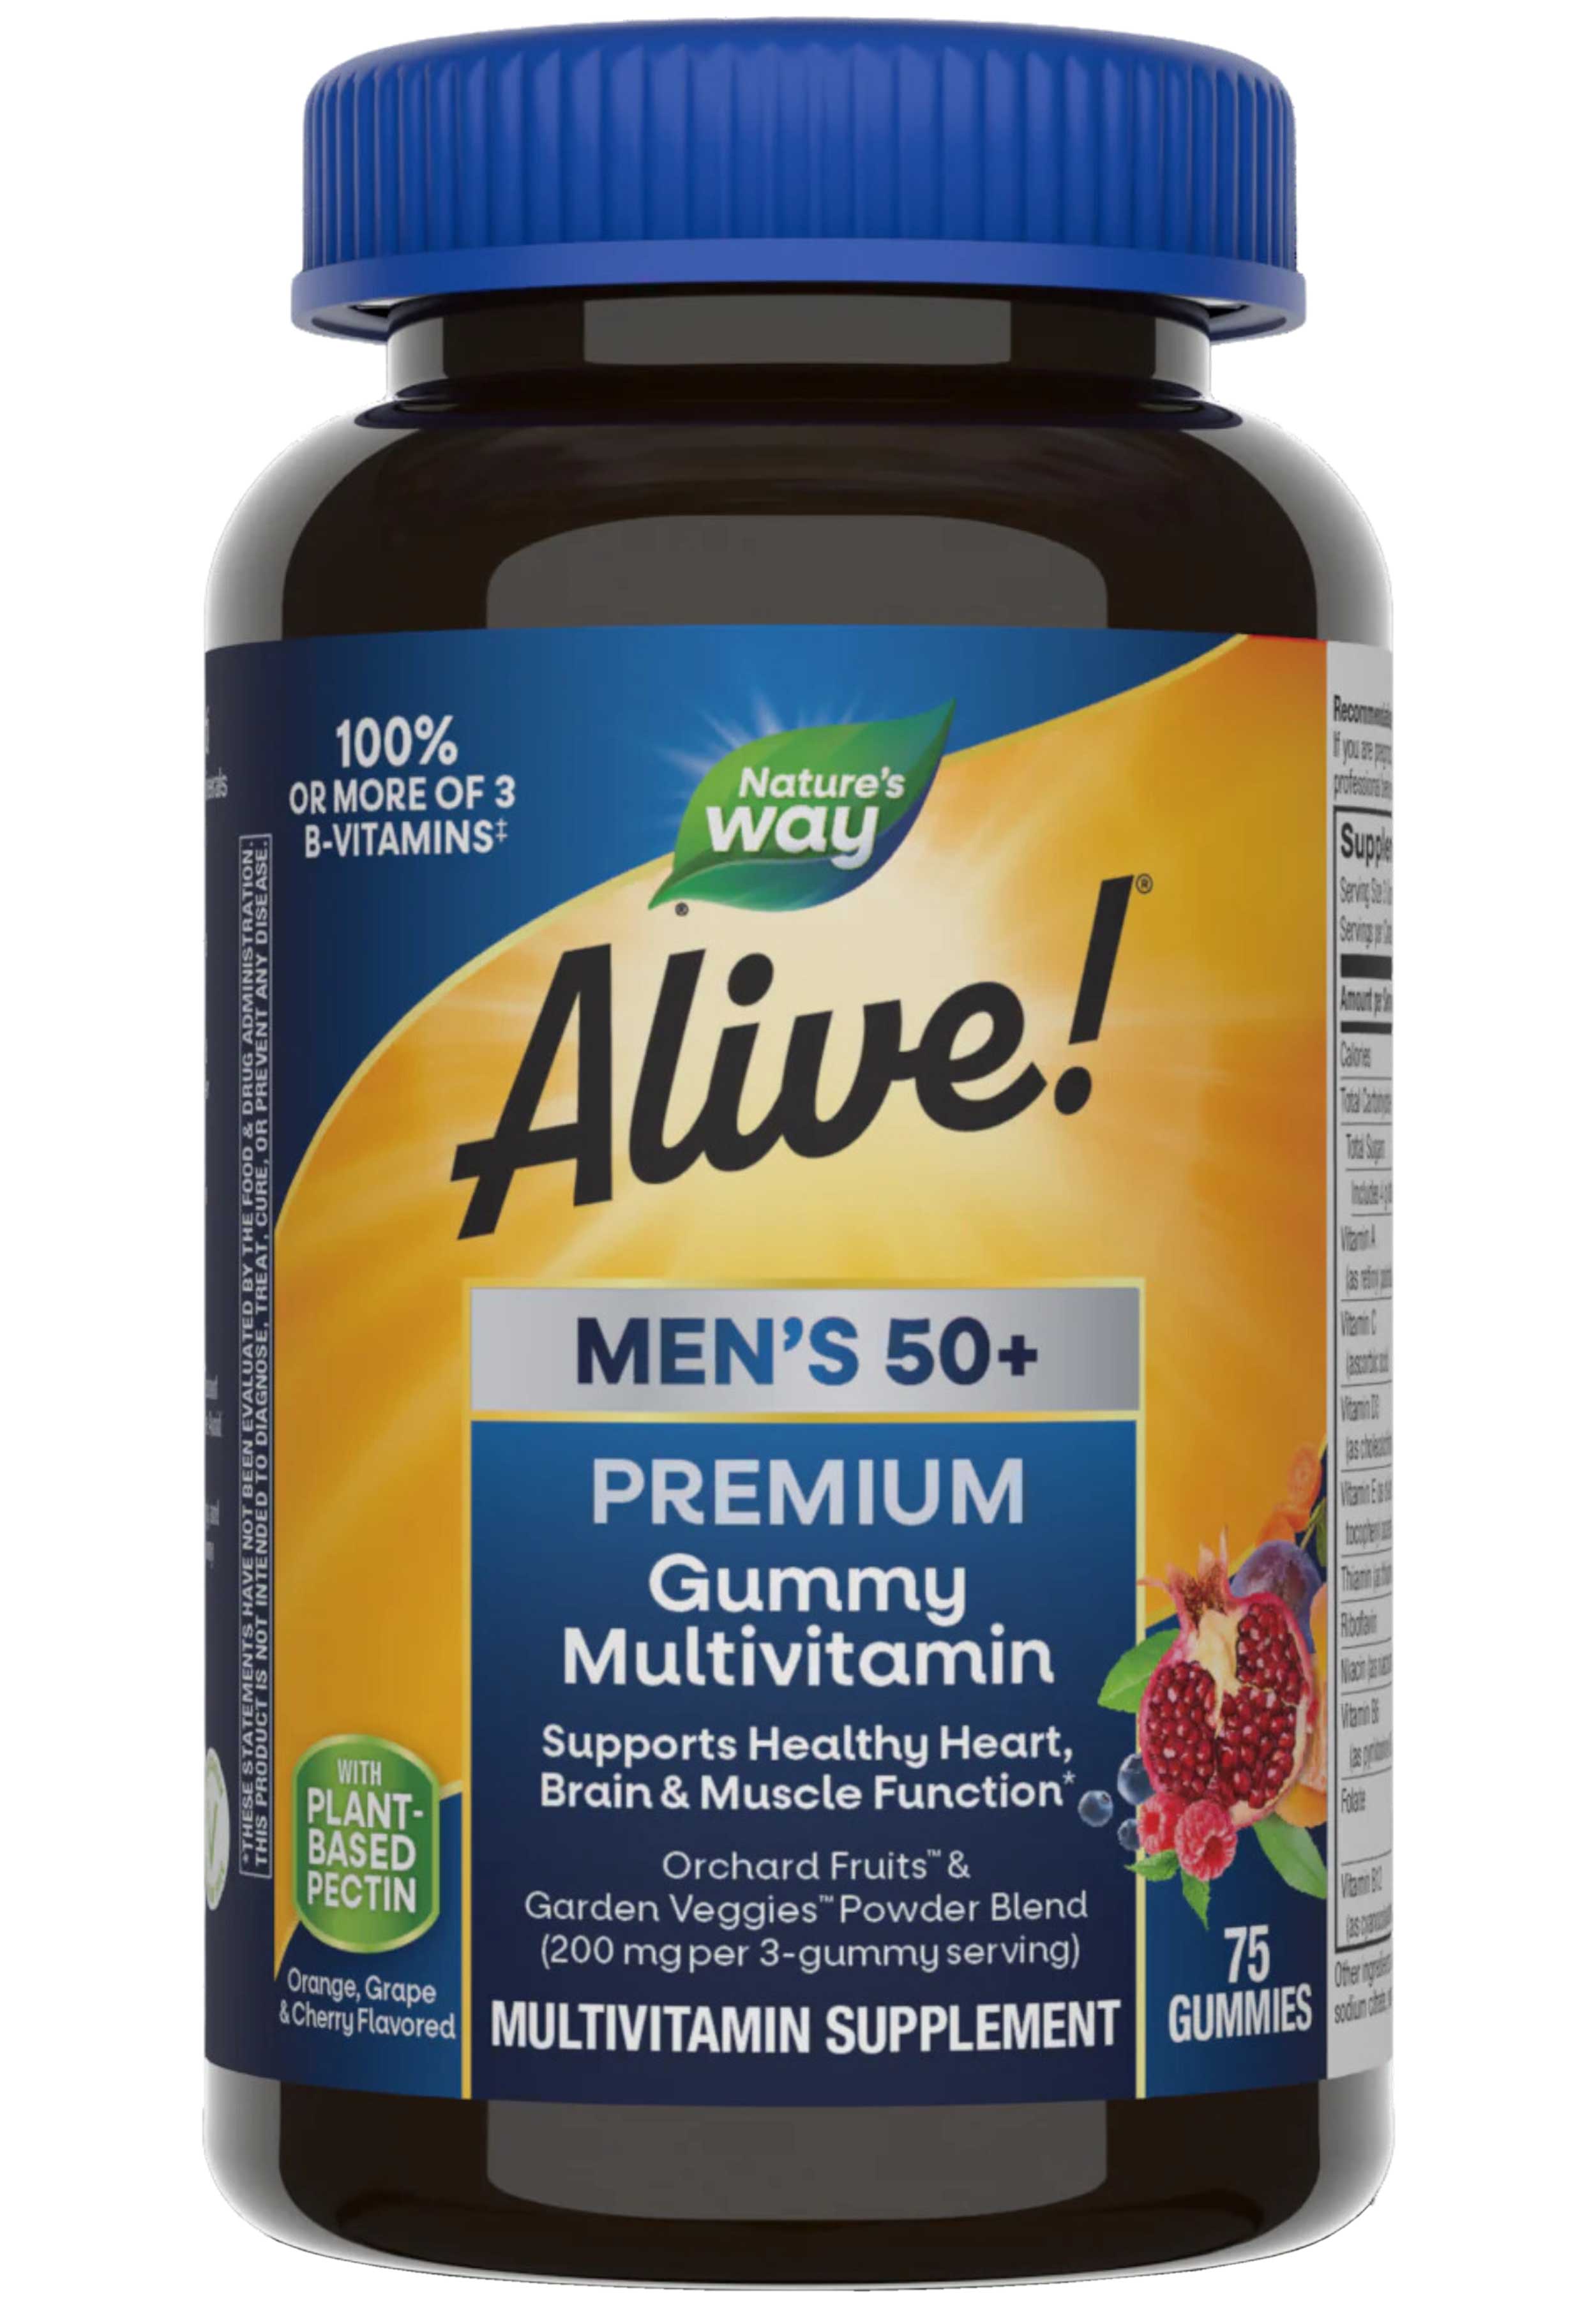 Nature's Way Alive! Men's 50+ Premium Gummy Multivitamin